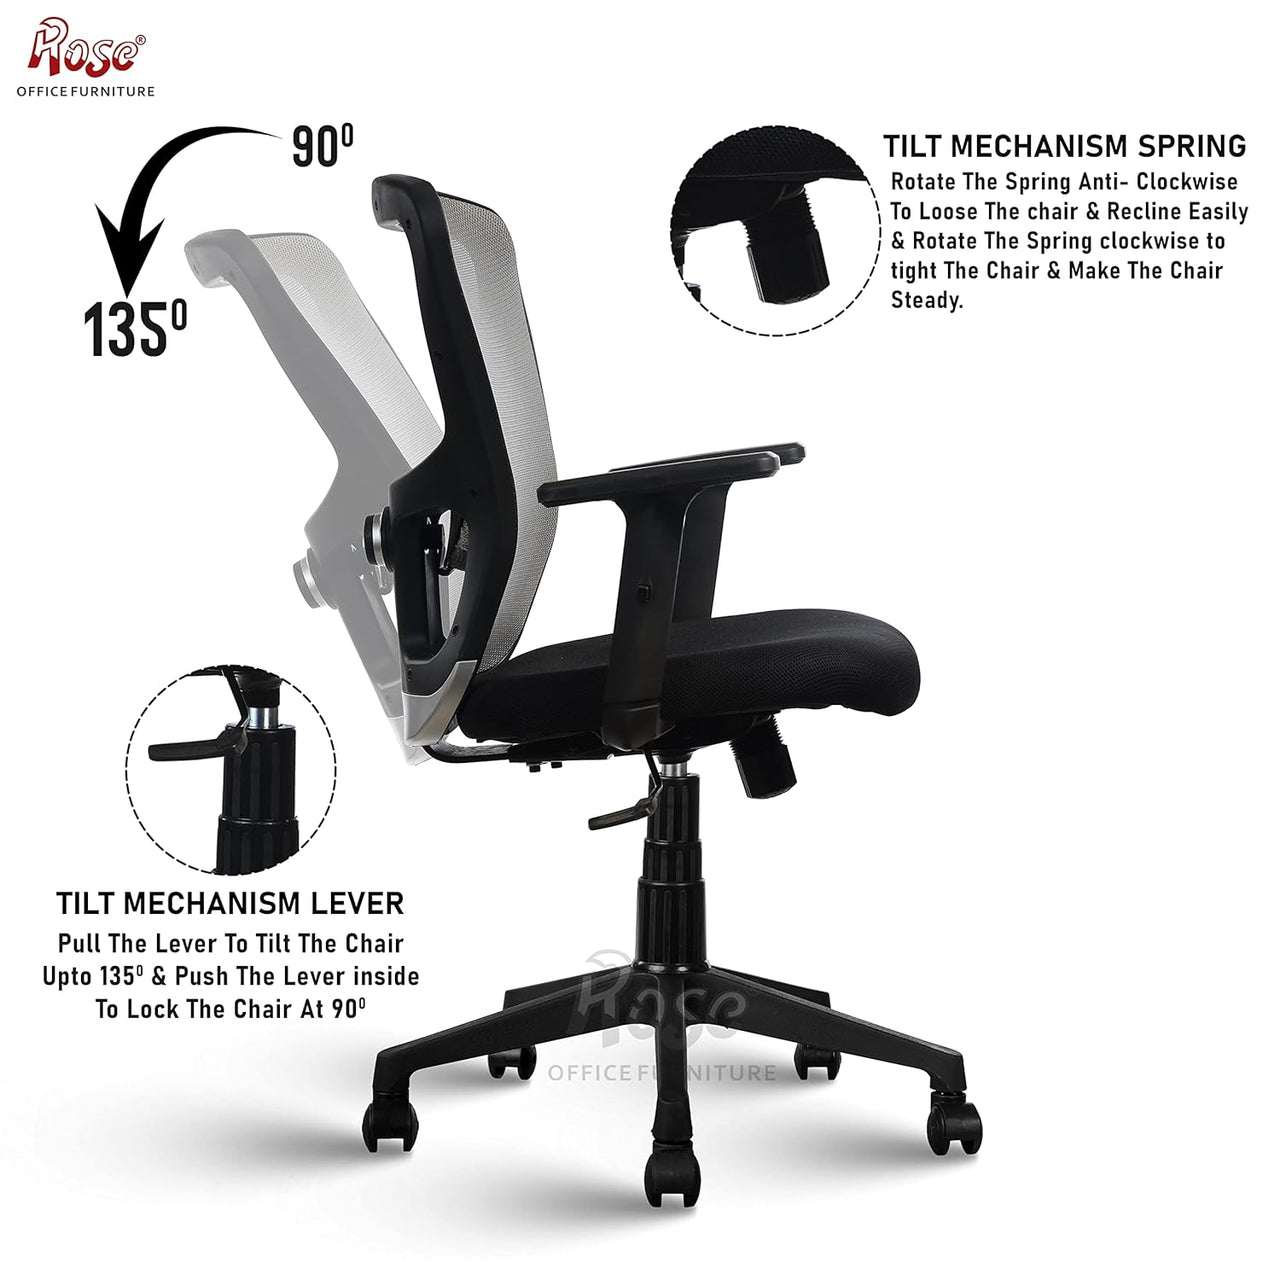 Teesla Mesh High-Back/Mid - Back Ergonomic Office Chair (Grey, Mid Back)